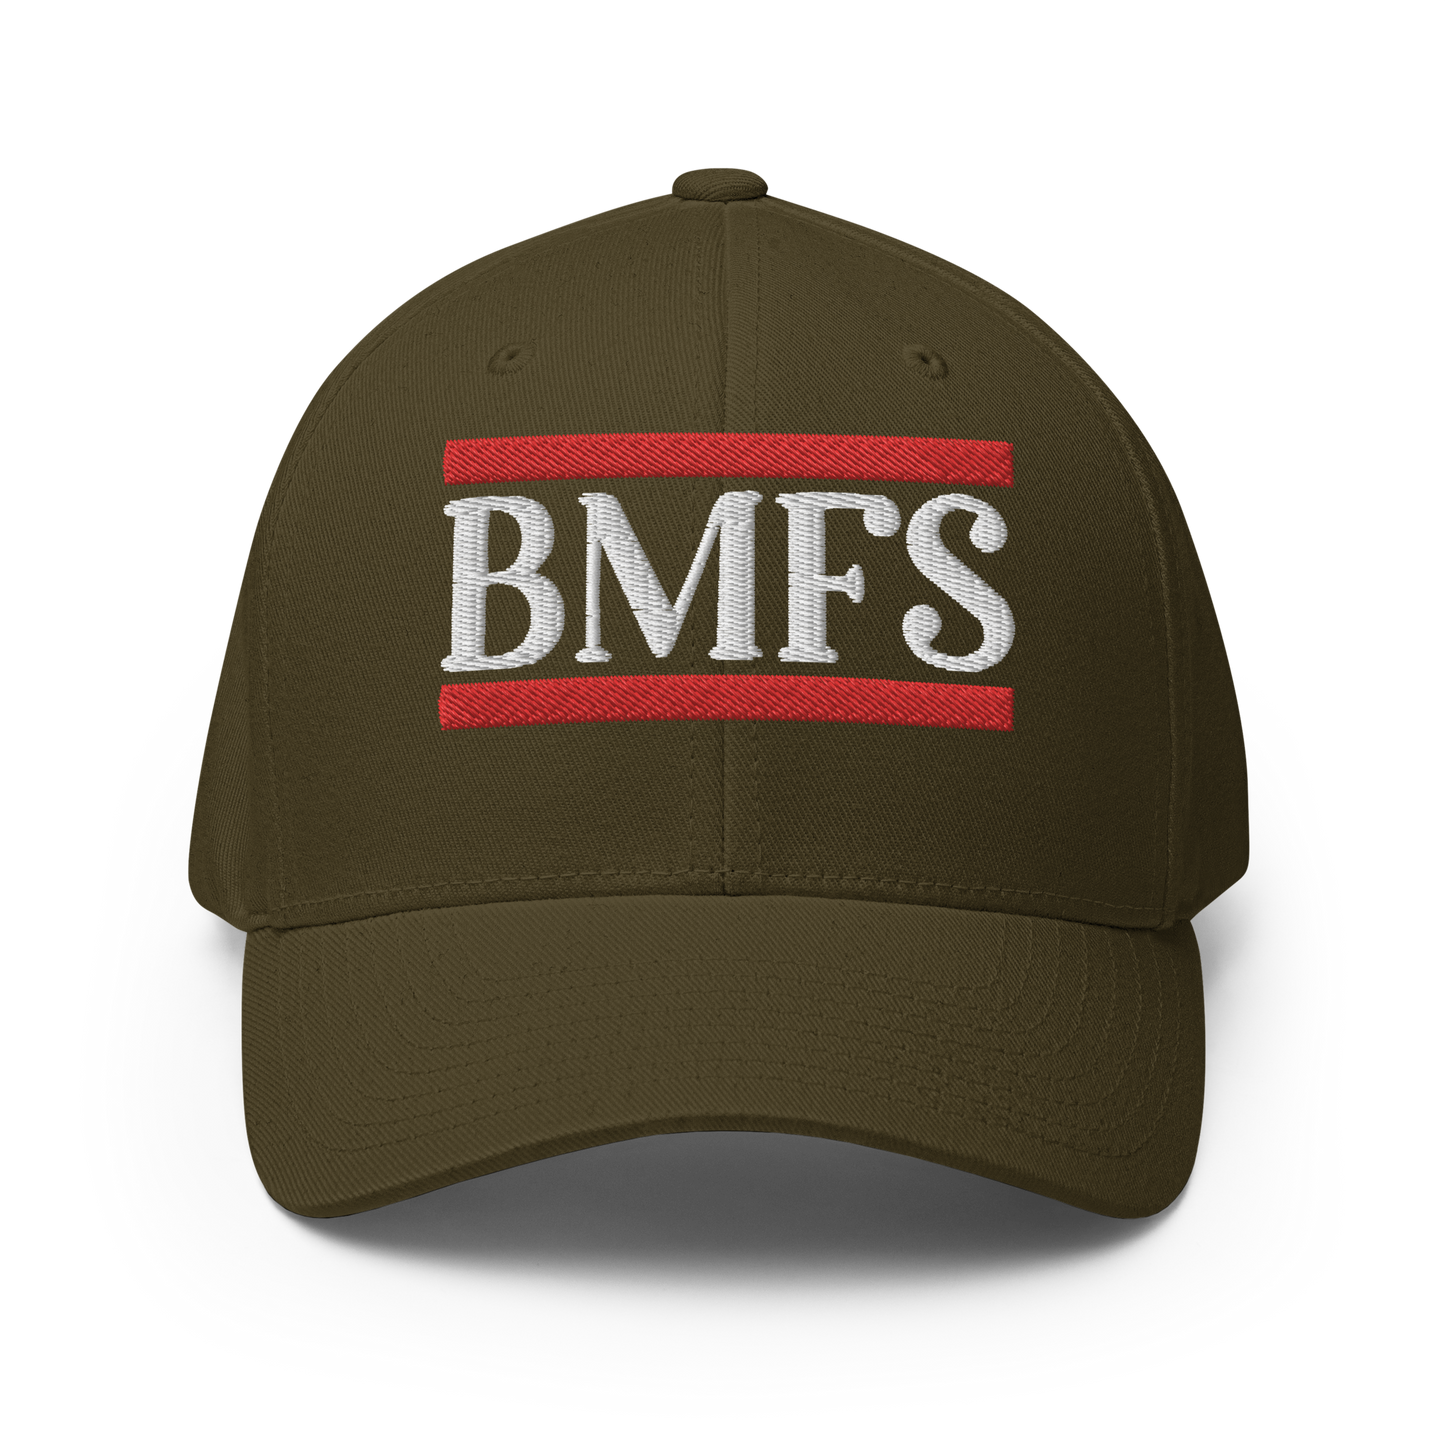 BMFS FlexFit Structured Twill Cap | BMFS 33 Inspired Cap